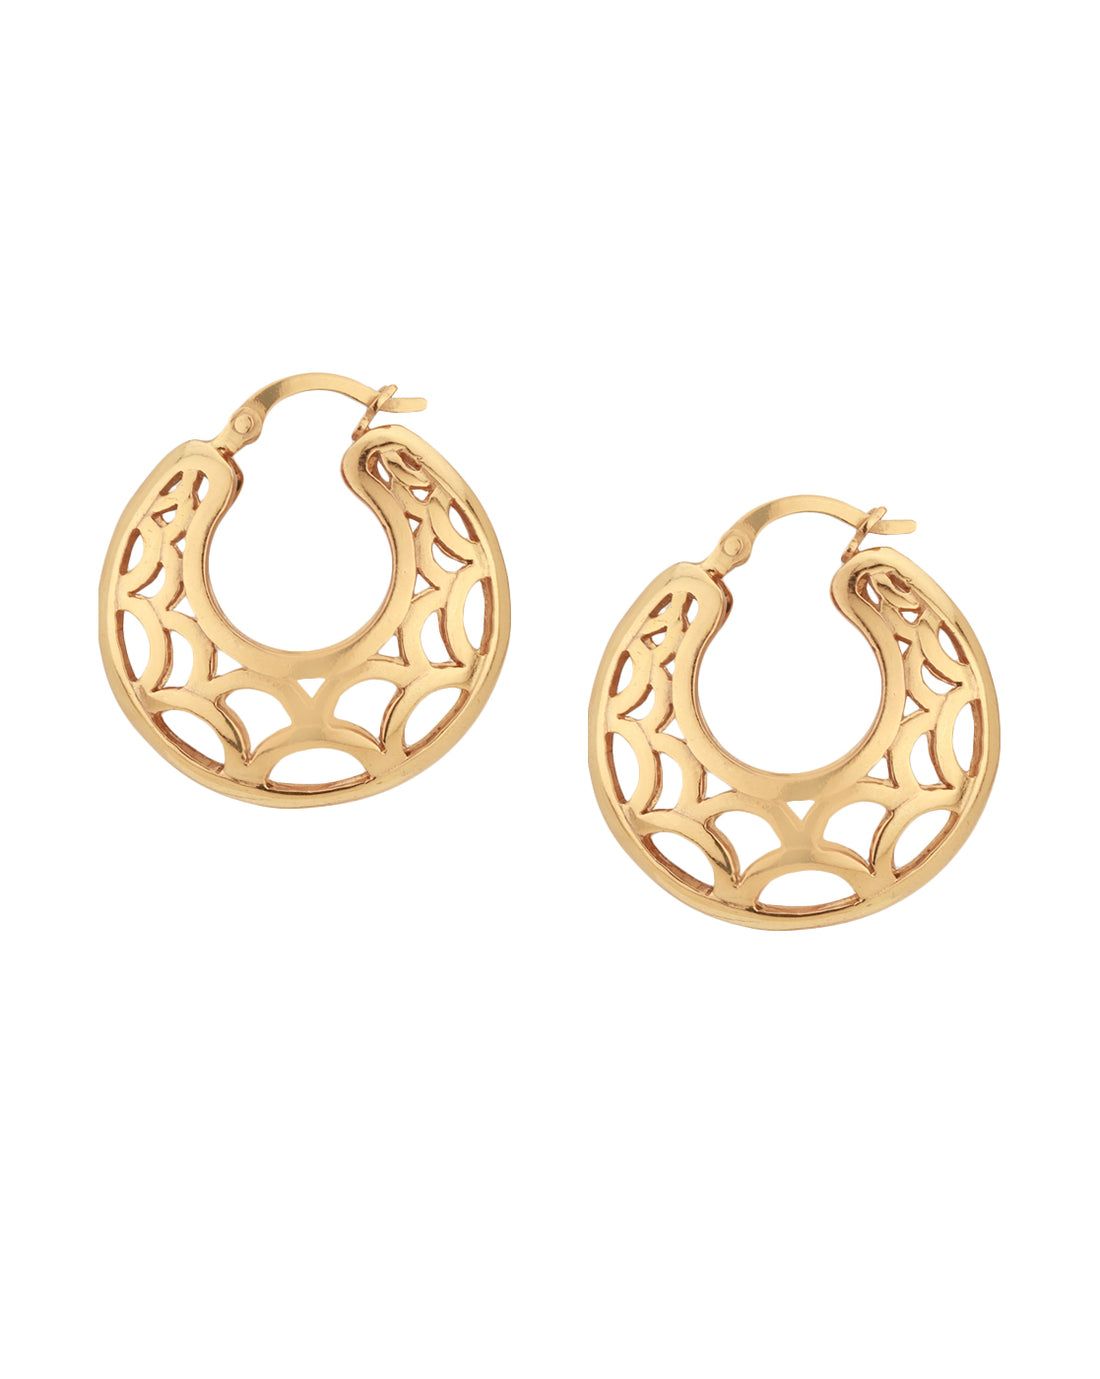 Carlton London Gold Plated Crescent Hoop Earring For Women